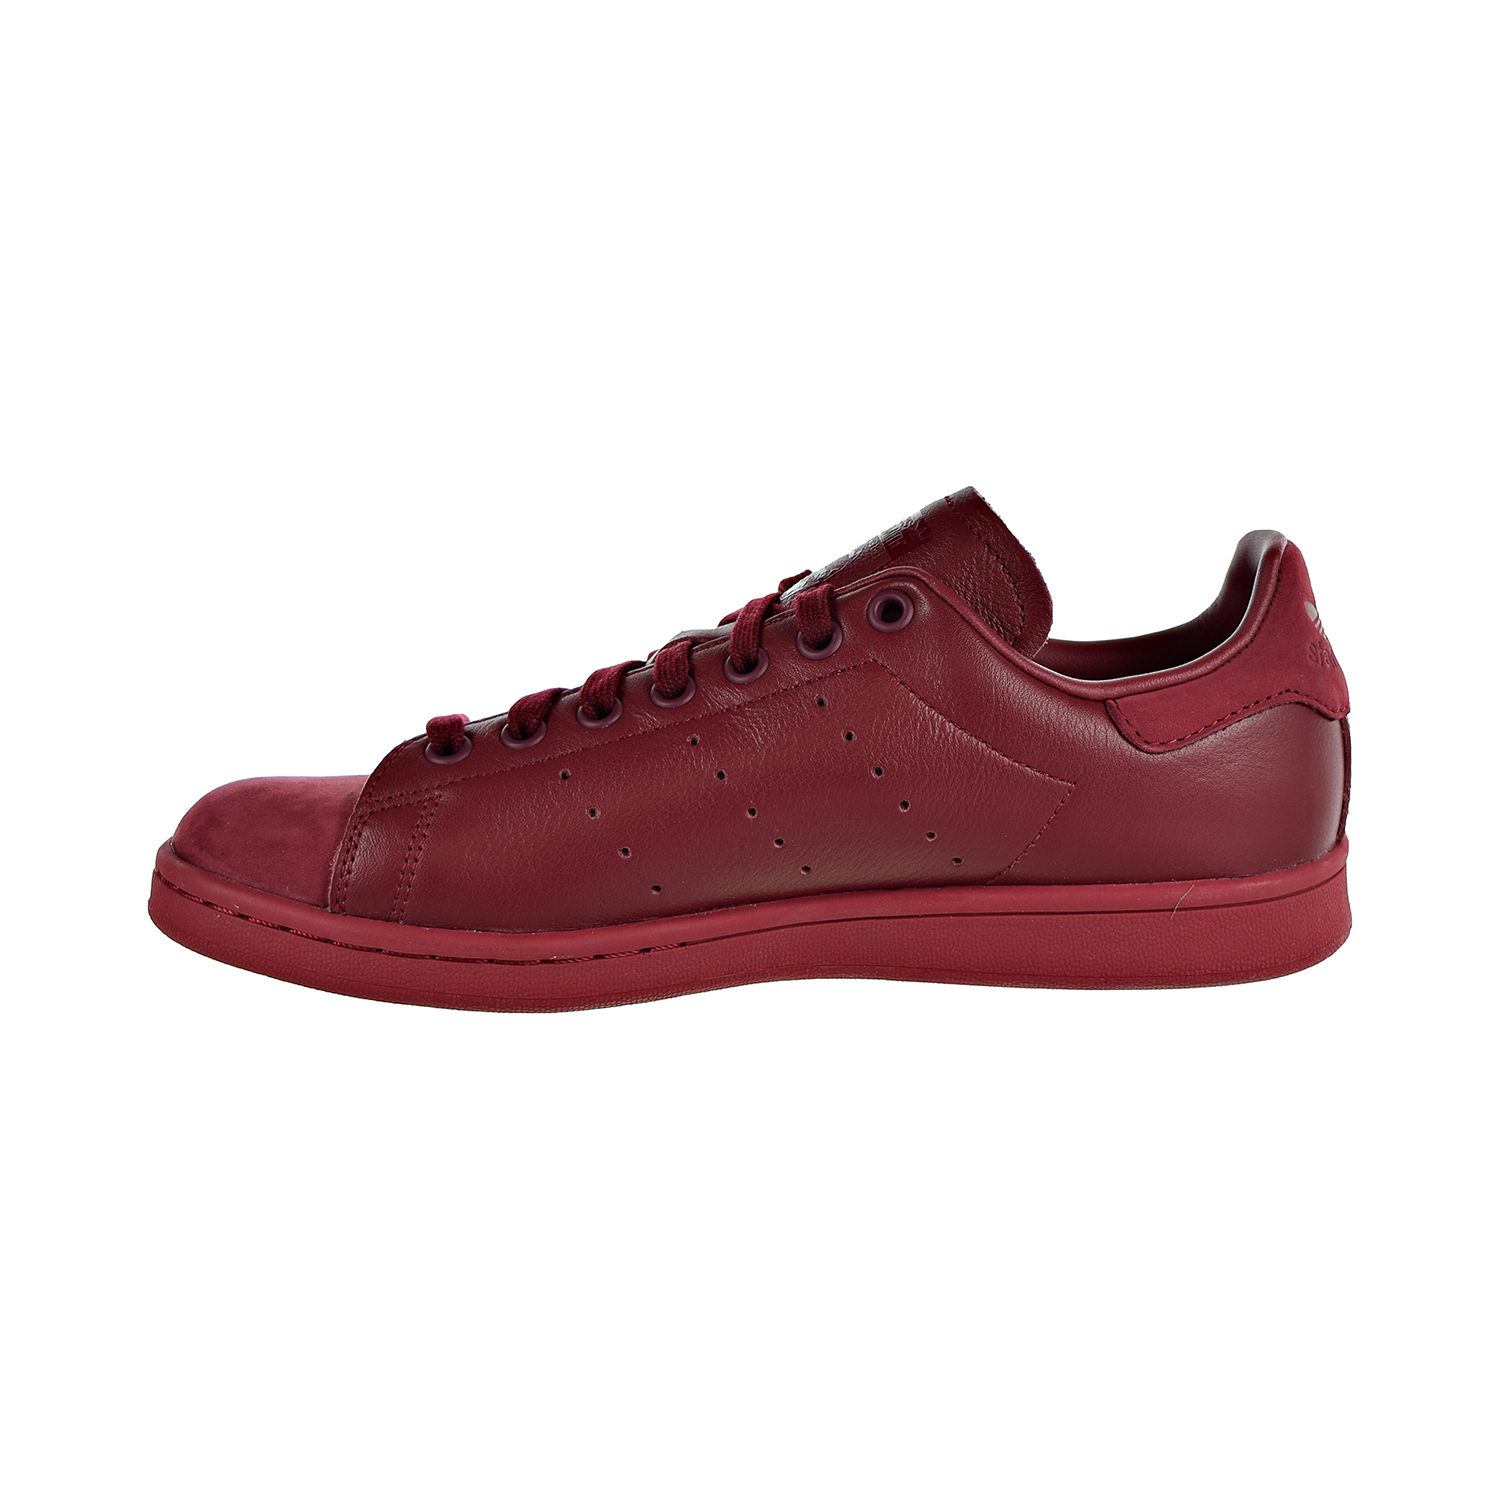 Adidas Stan Smith Men's Shoes Burgundy B37920 | eBay